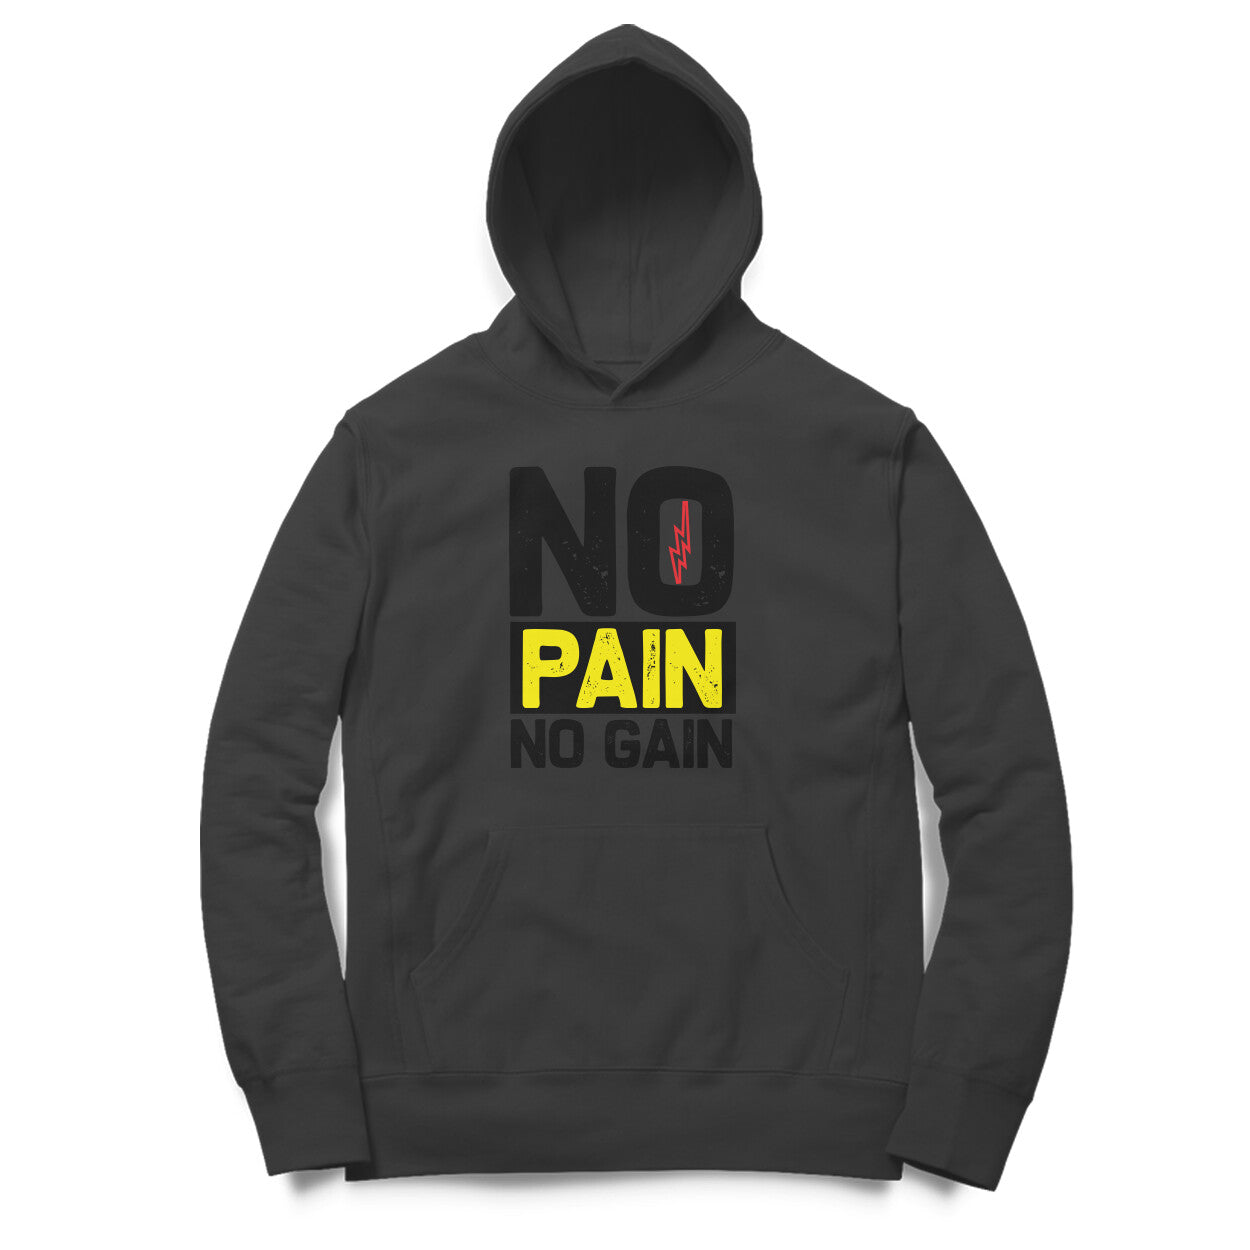 TNH - Unisex Hoodies - No Pain No gain